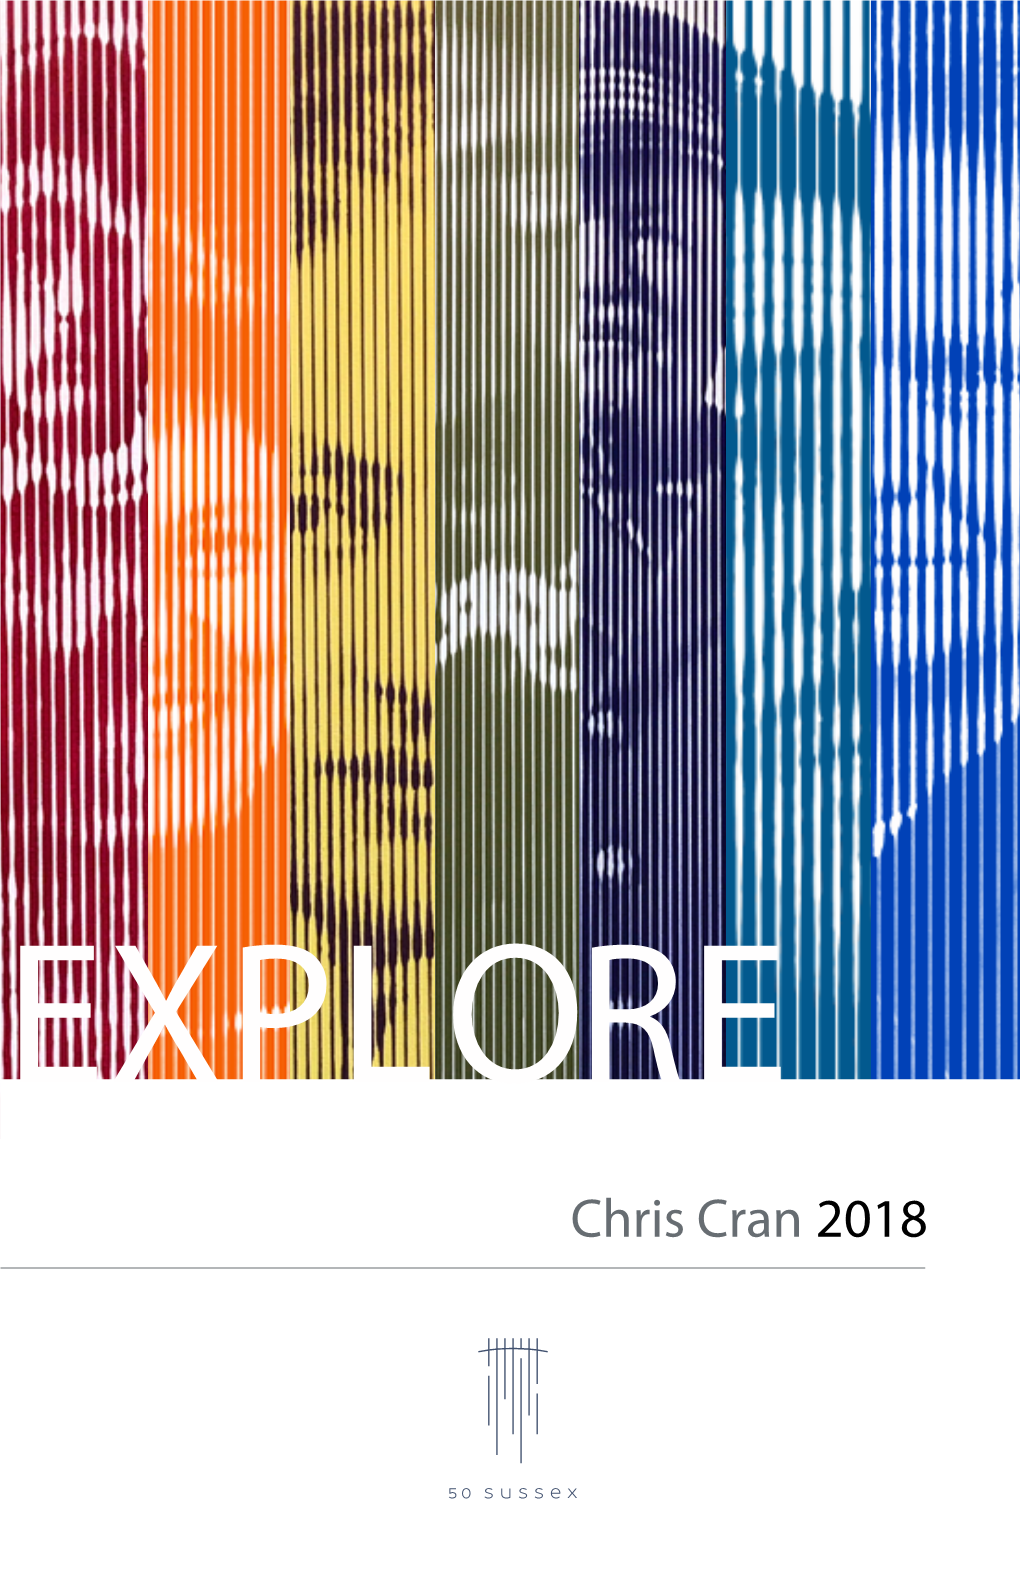 Chris Cran 2018 ABOUT the ARTIST